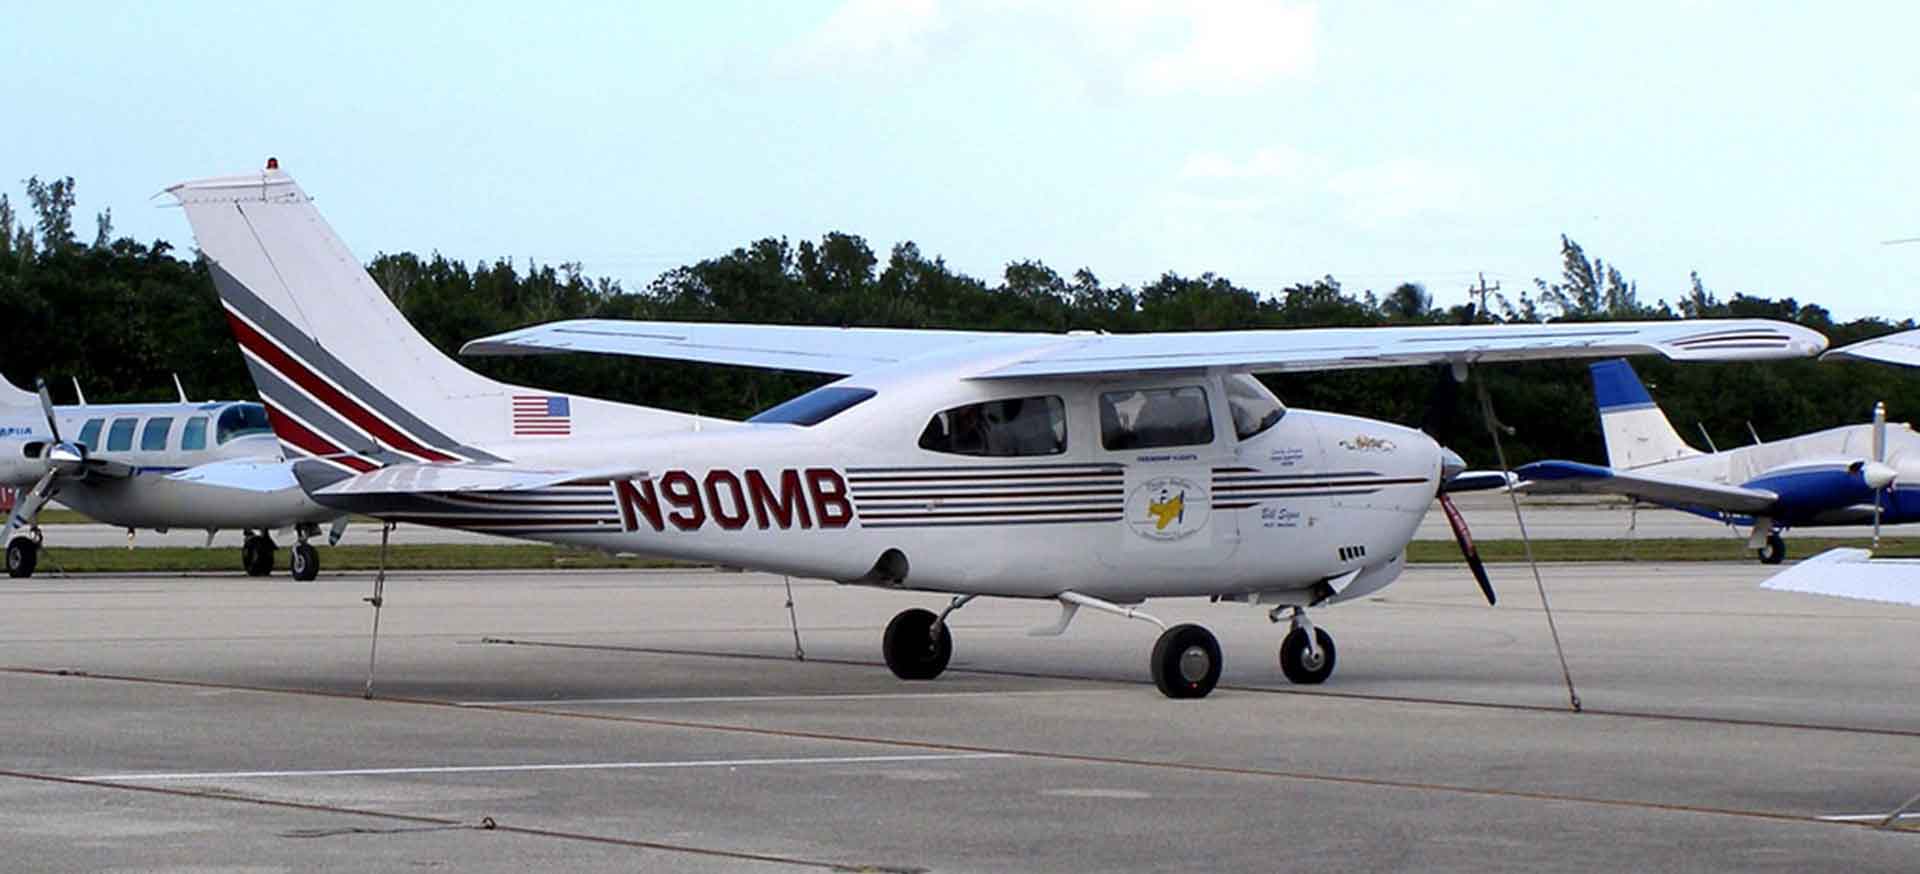 Cessna N90MB on tarmack